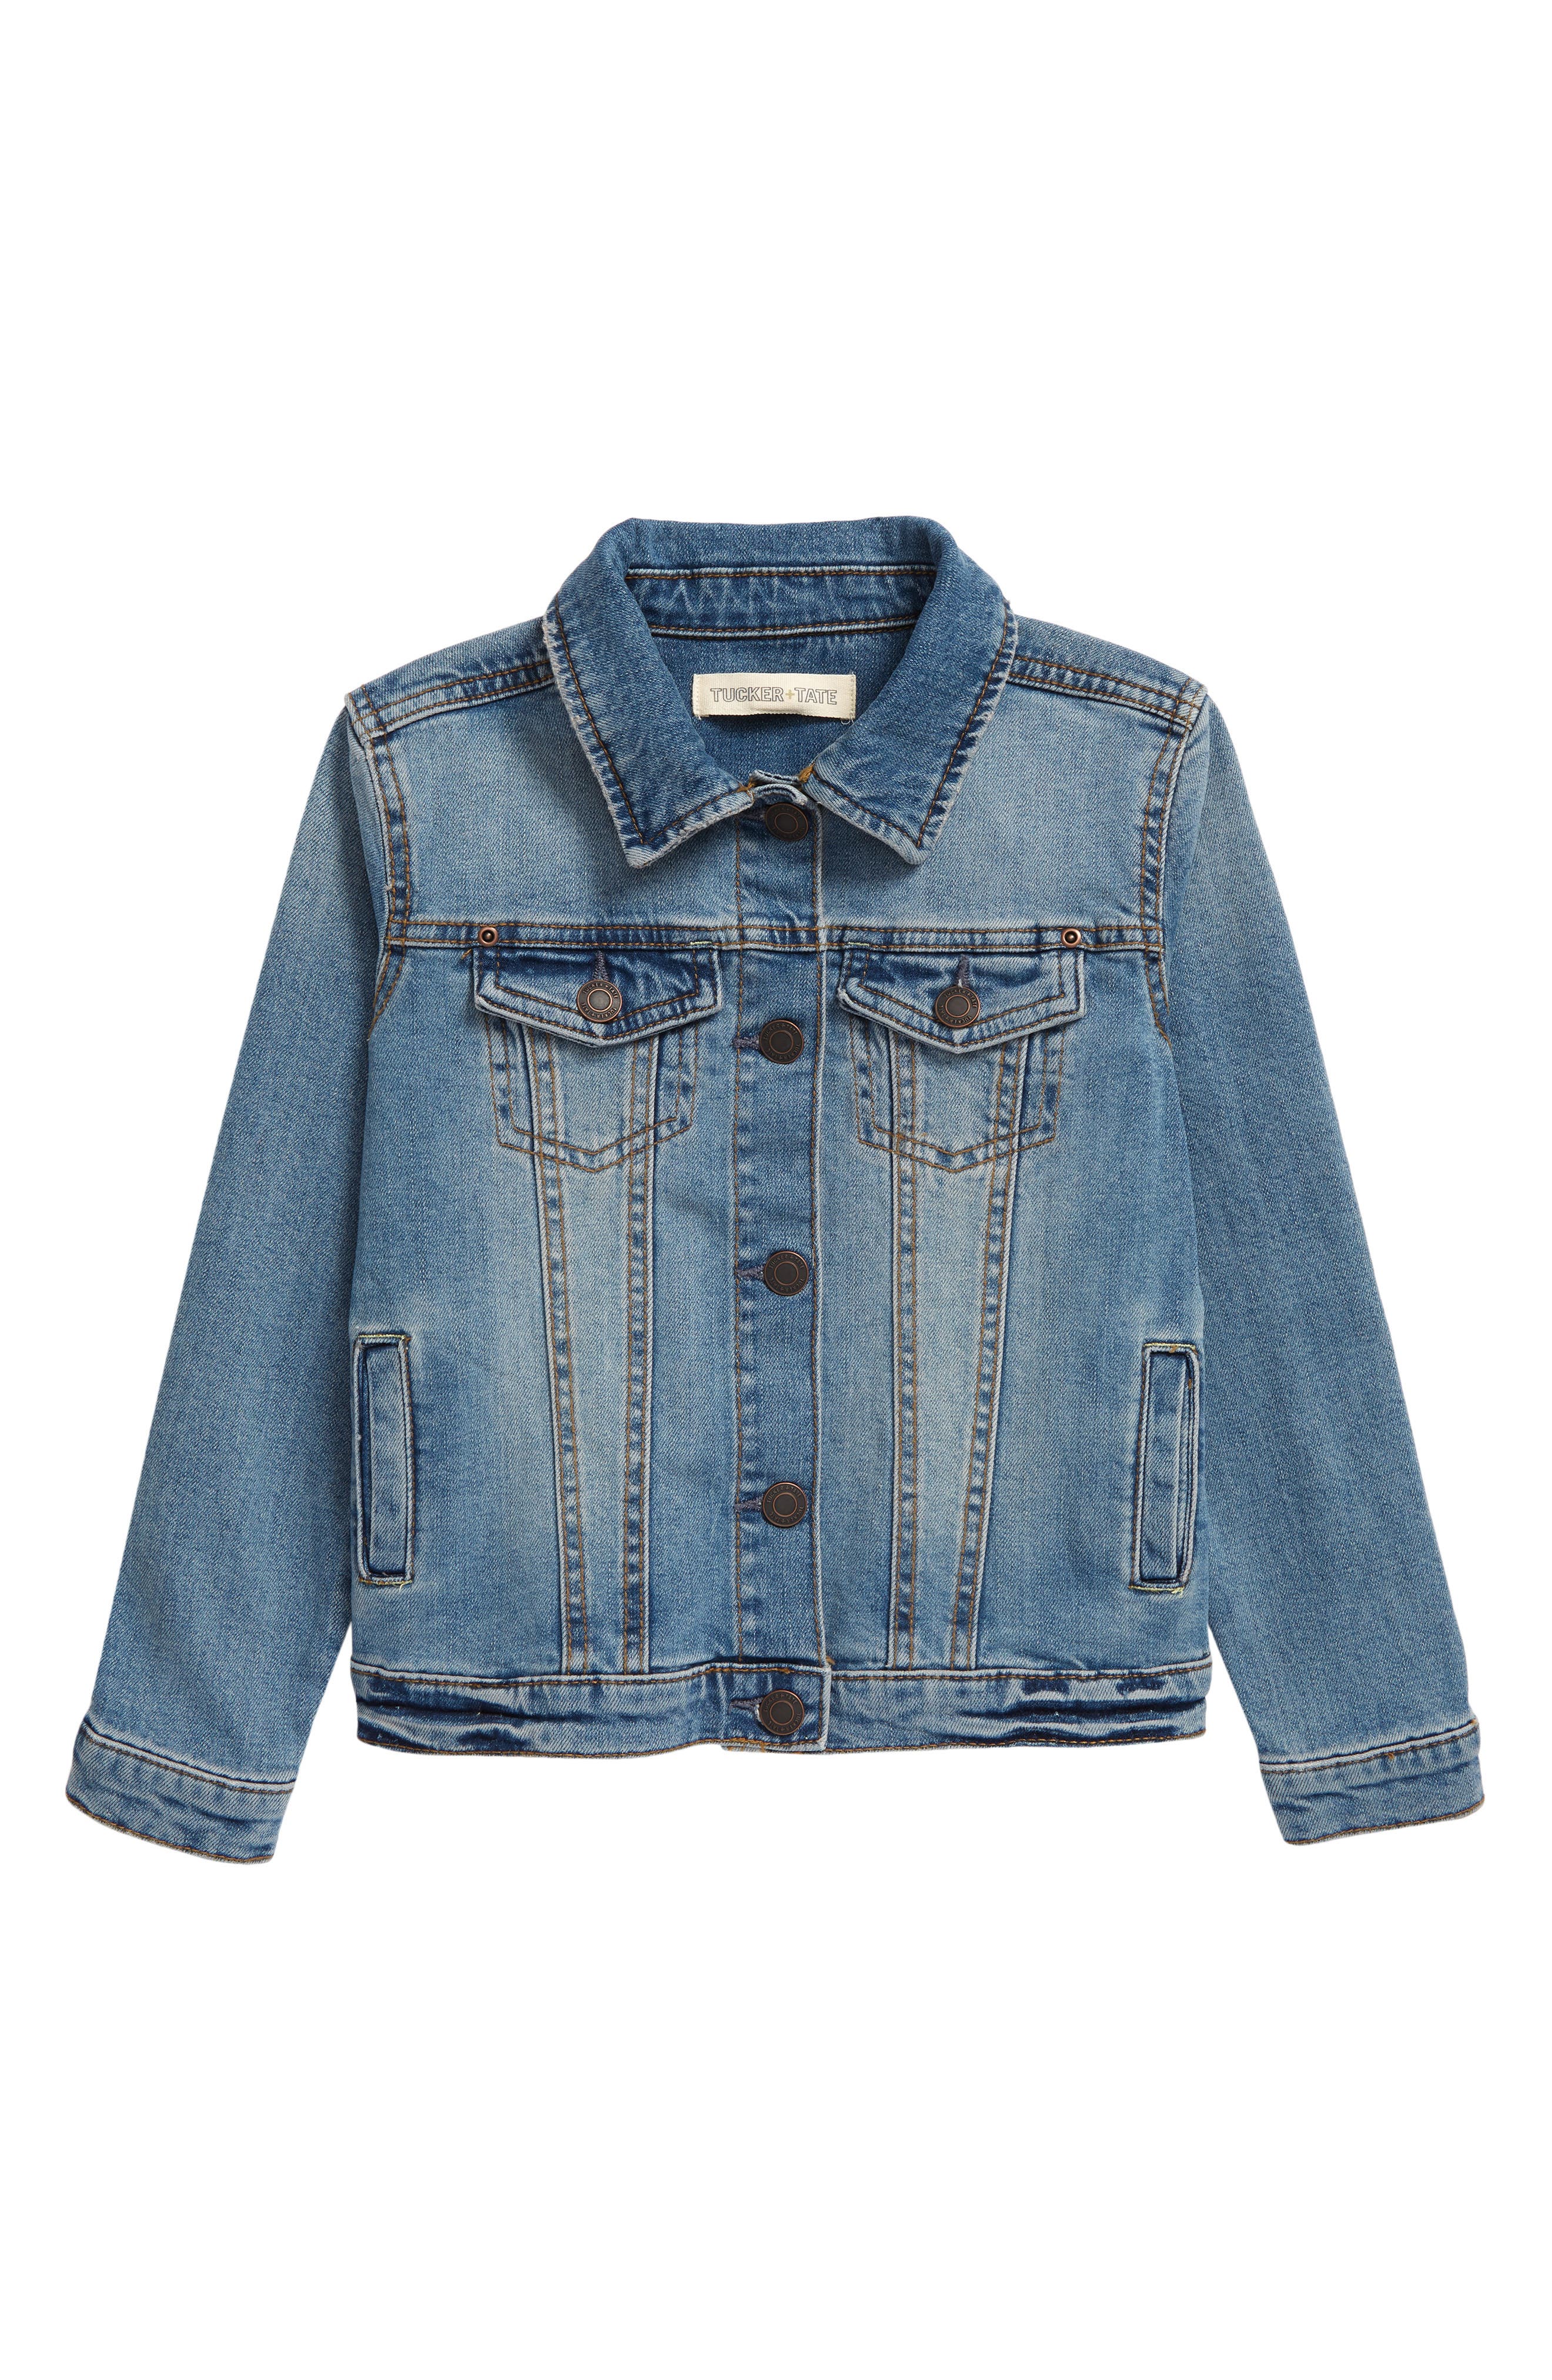 5 T Blue Baby Boys Girls Denim Jacket Kids Toddler Button Down Jeans Jacket Top Coat Outerwear 18 M